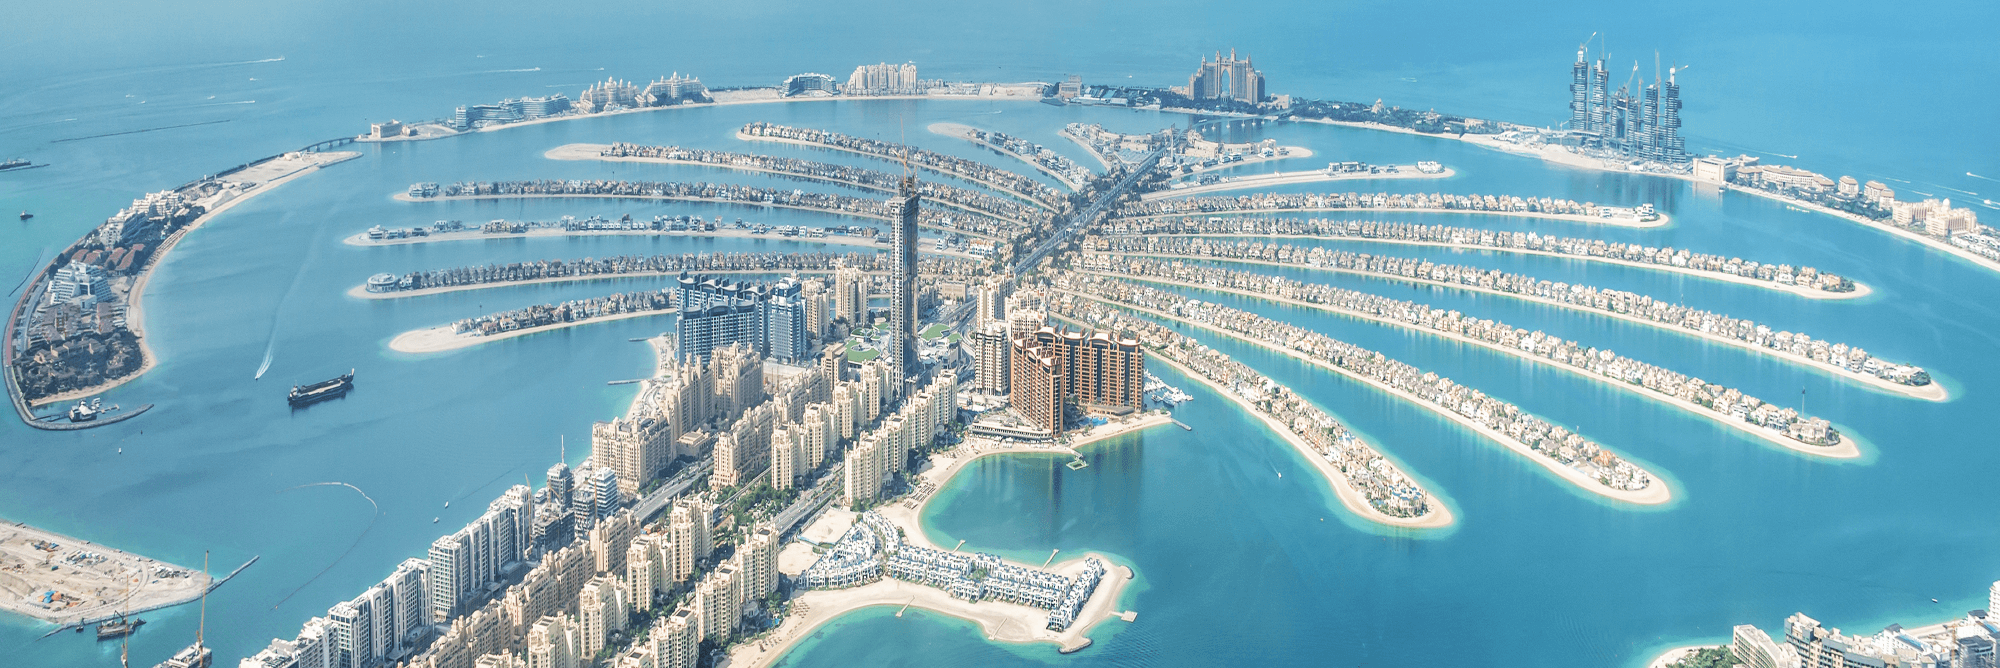 United Arab Emirates landscape with blue ocean